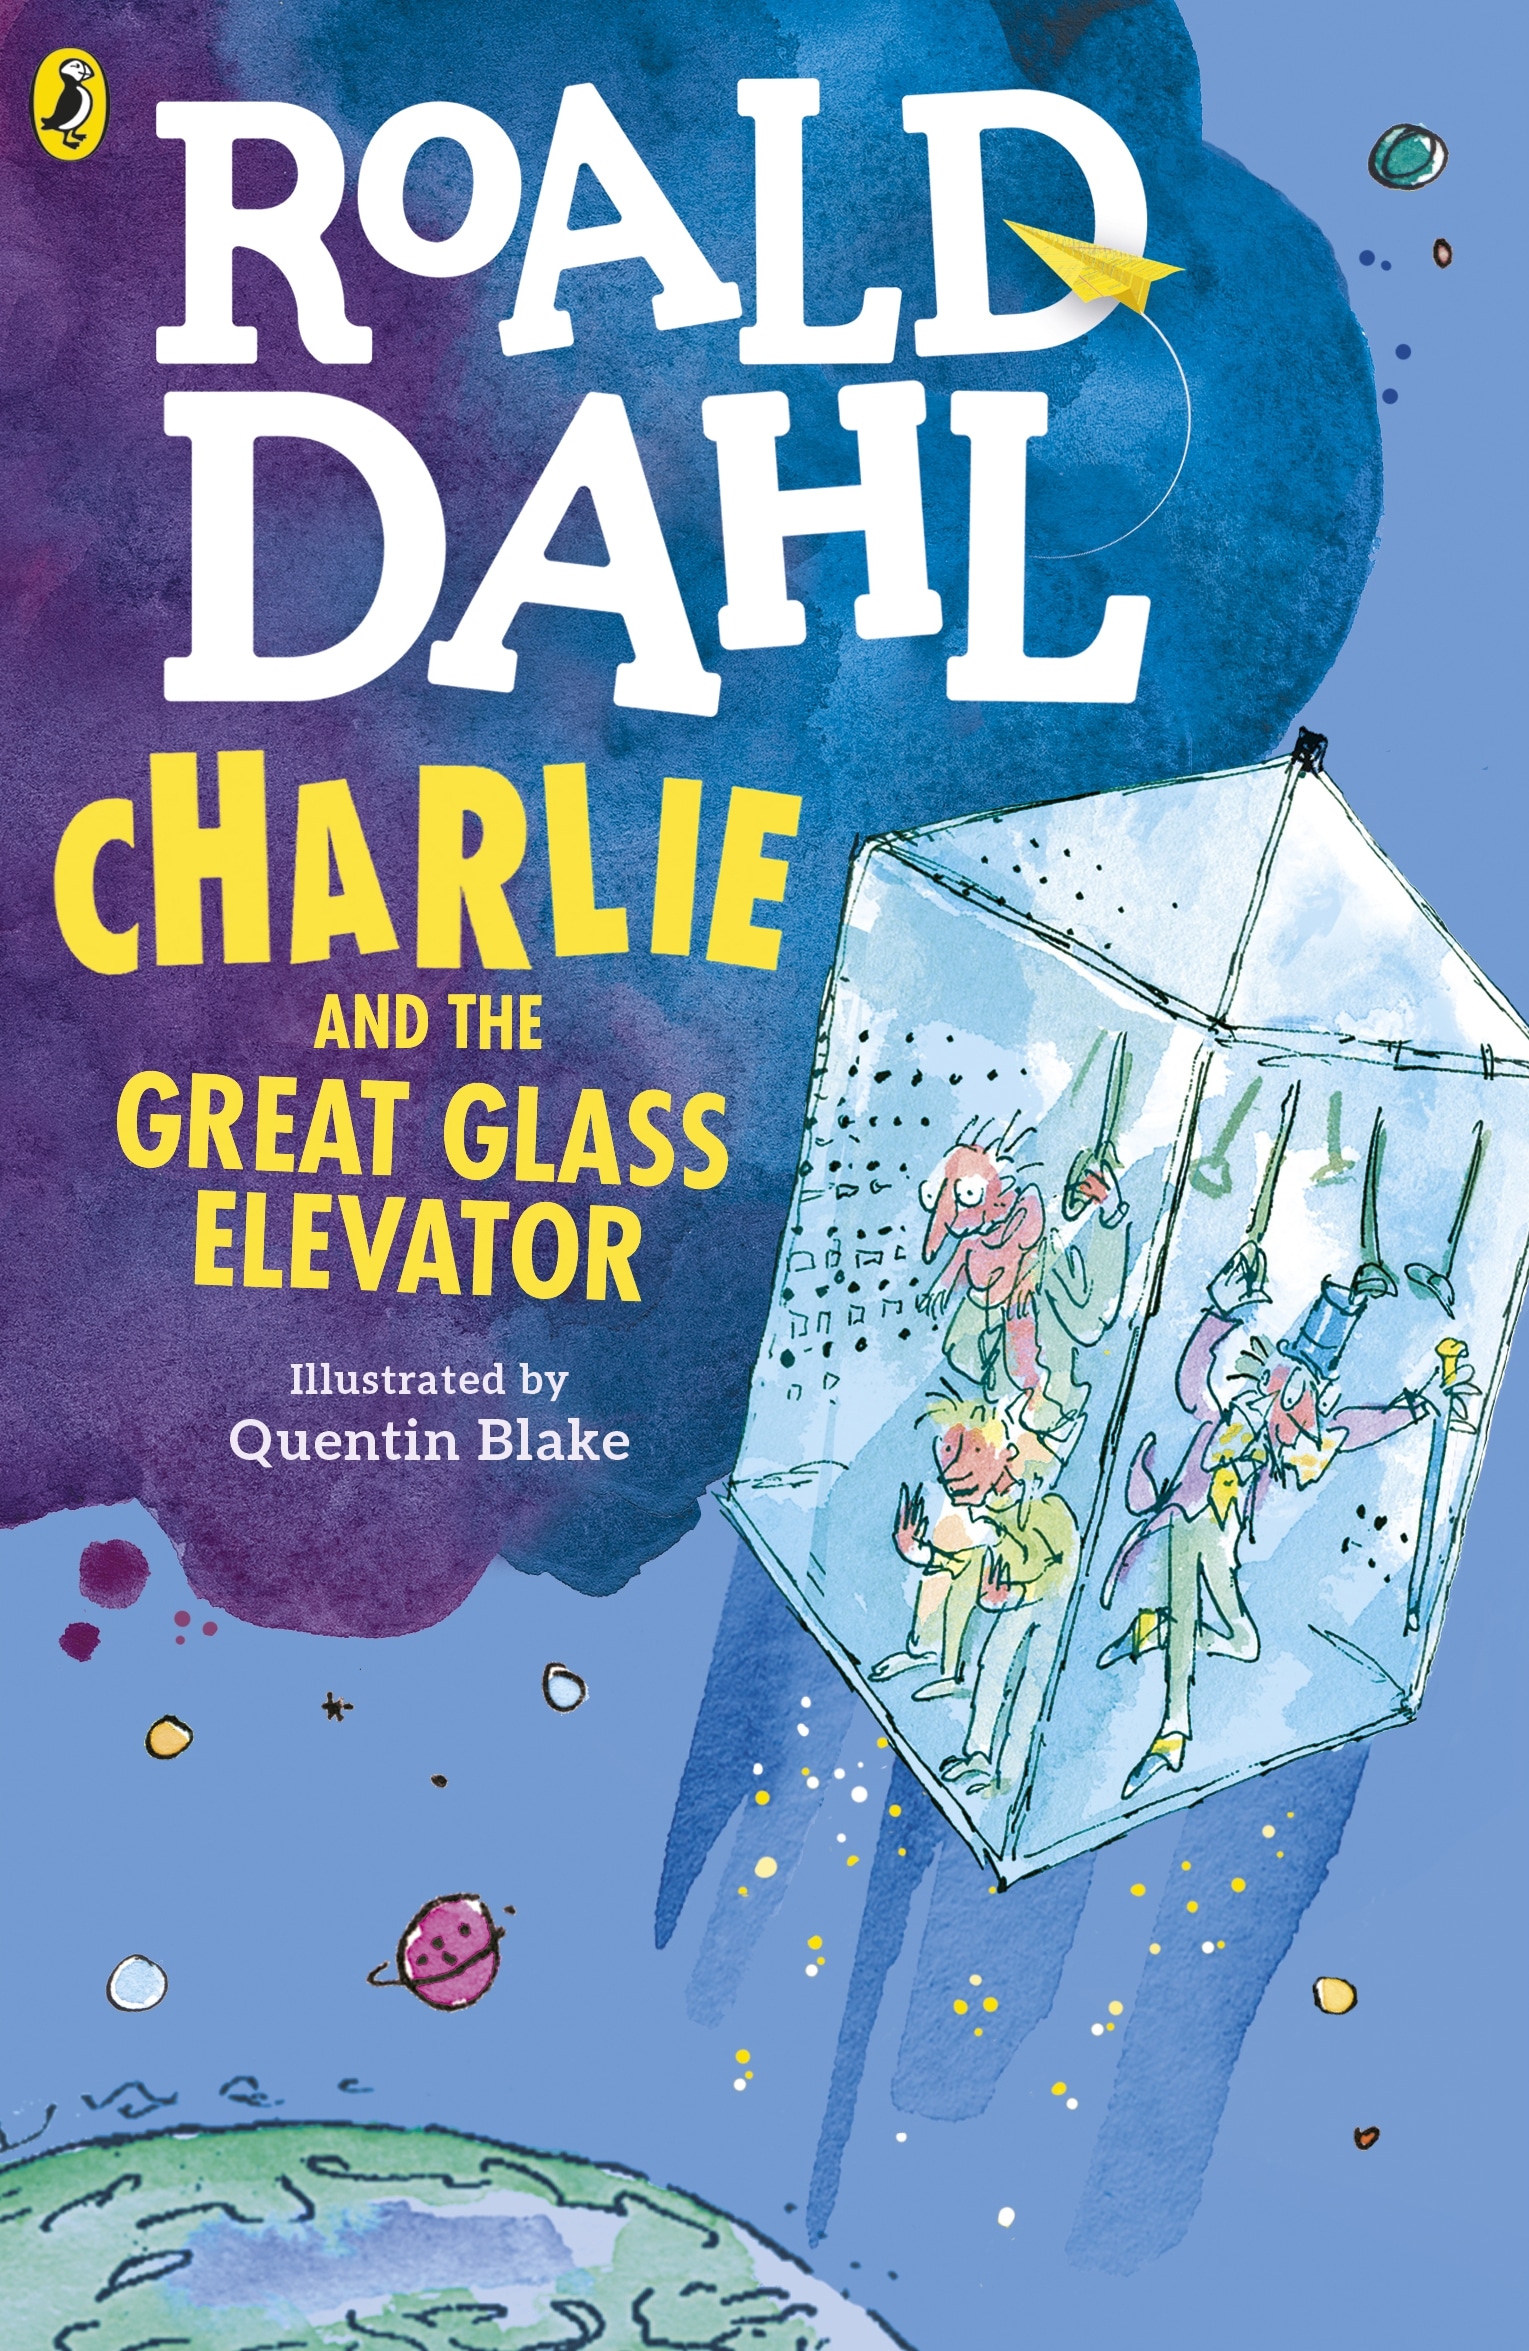 Книга «Charlie and the Great Glass Elevator» Roald Dahl — 11 февраля 2016 г.